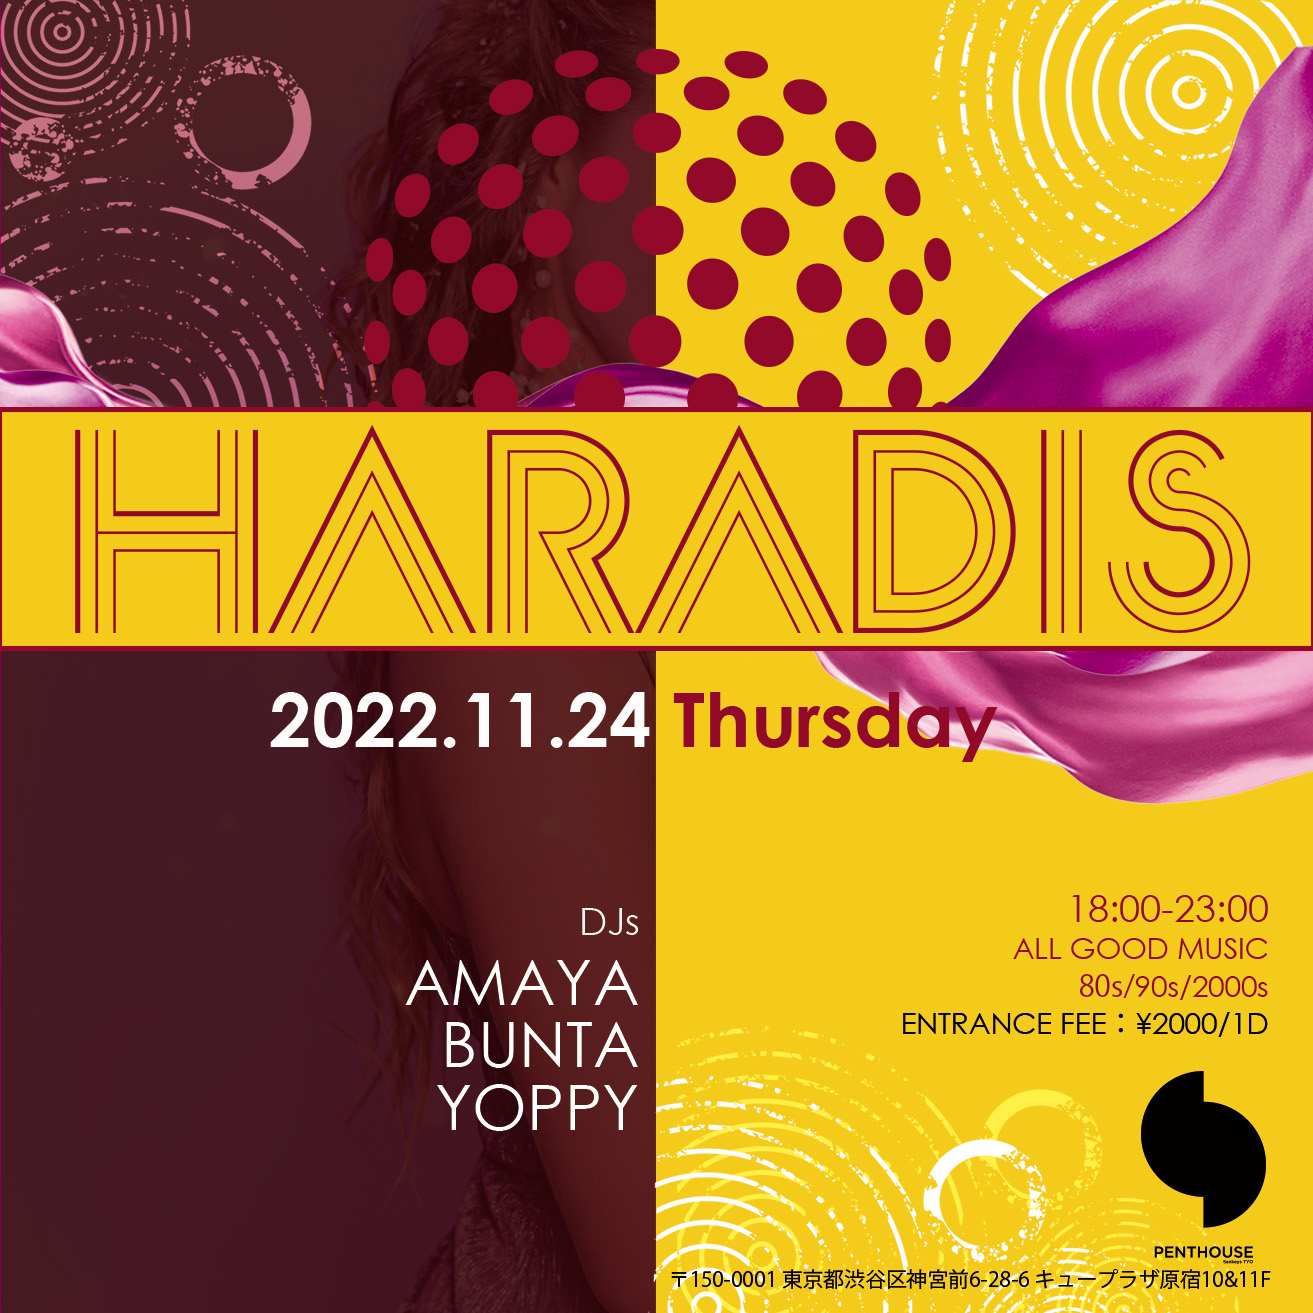 HARADIS -Third Thursday-